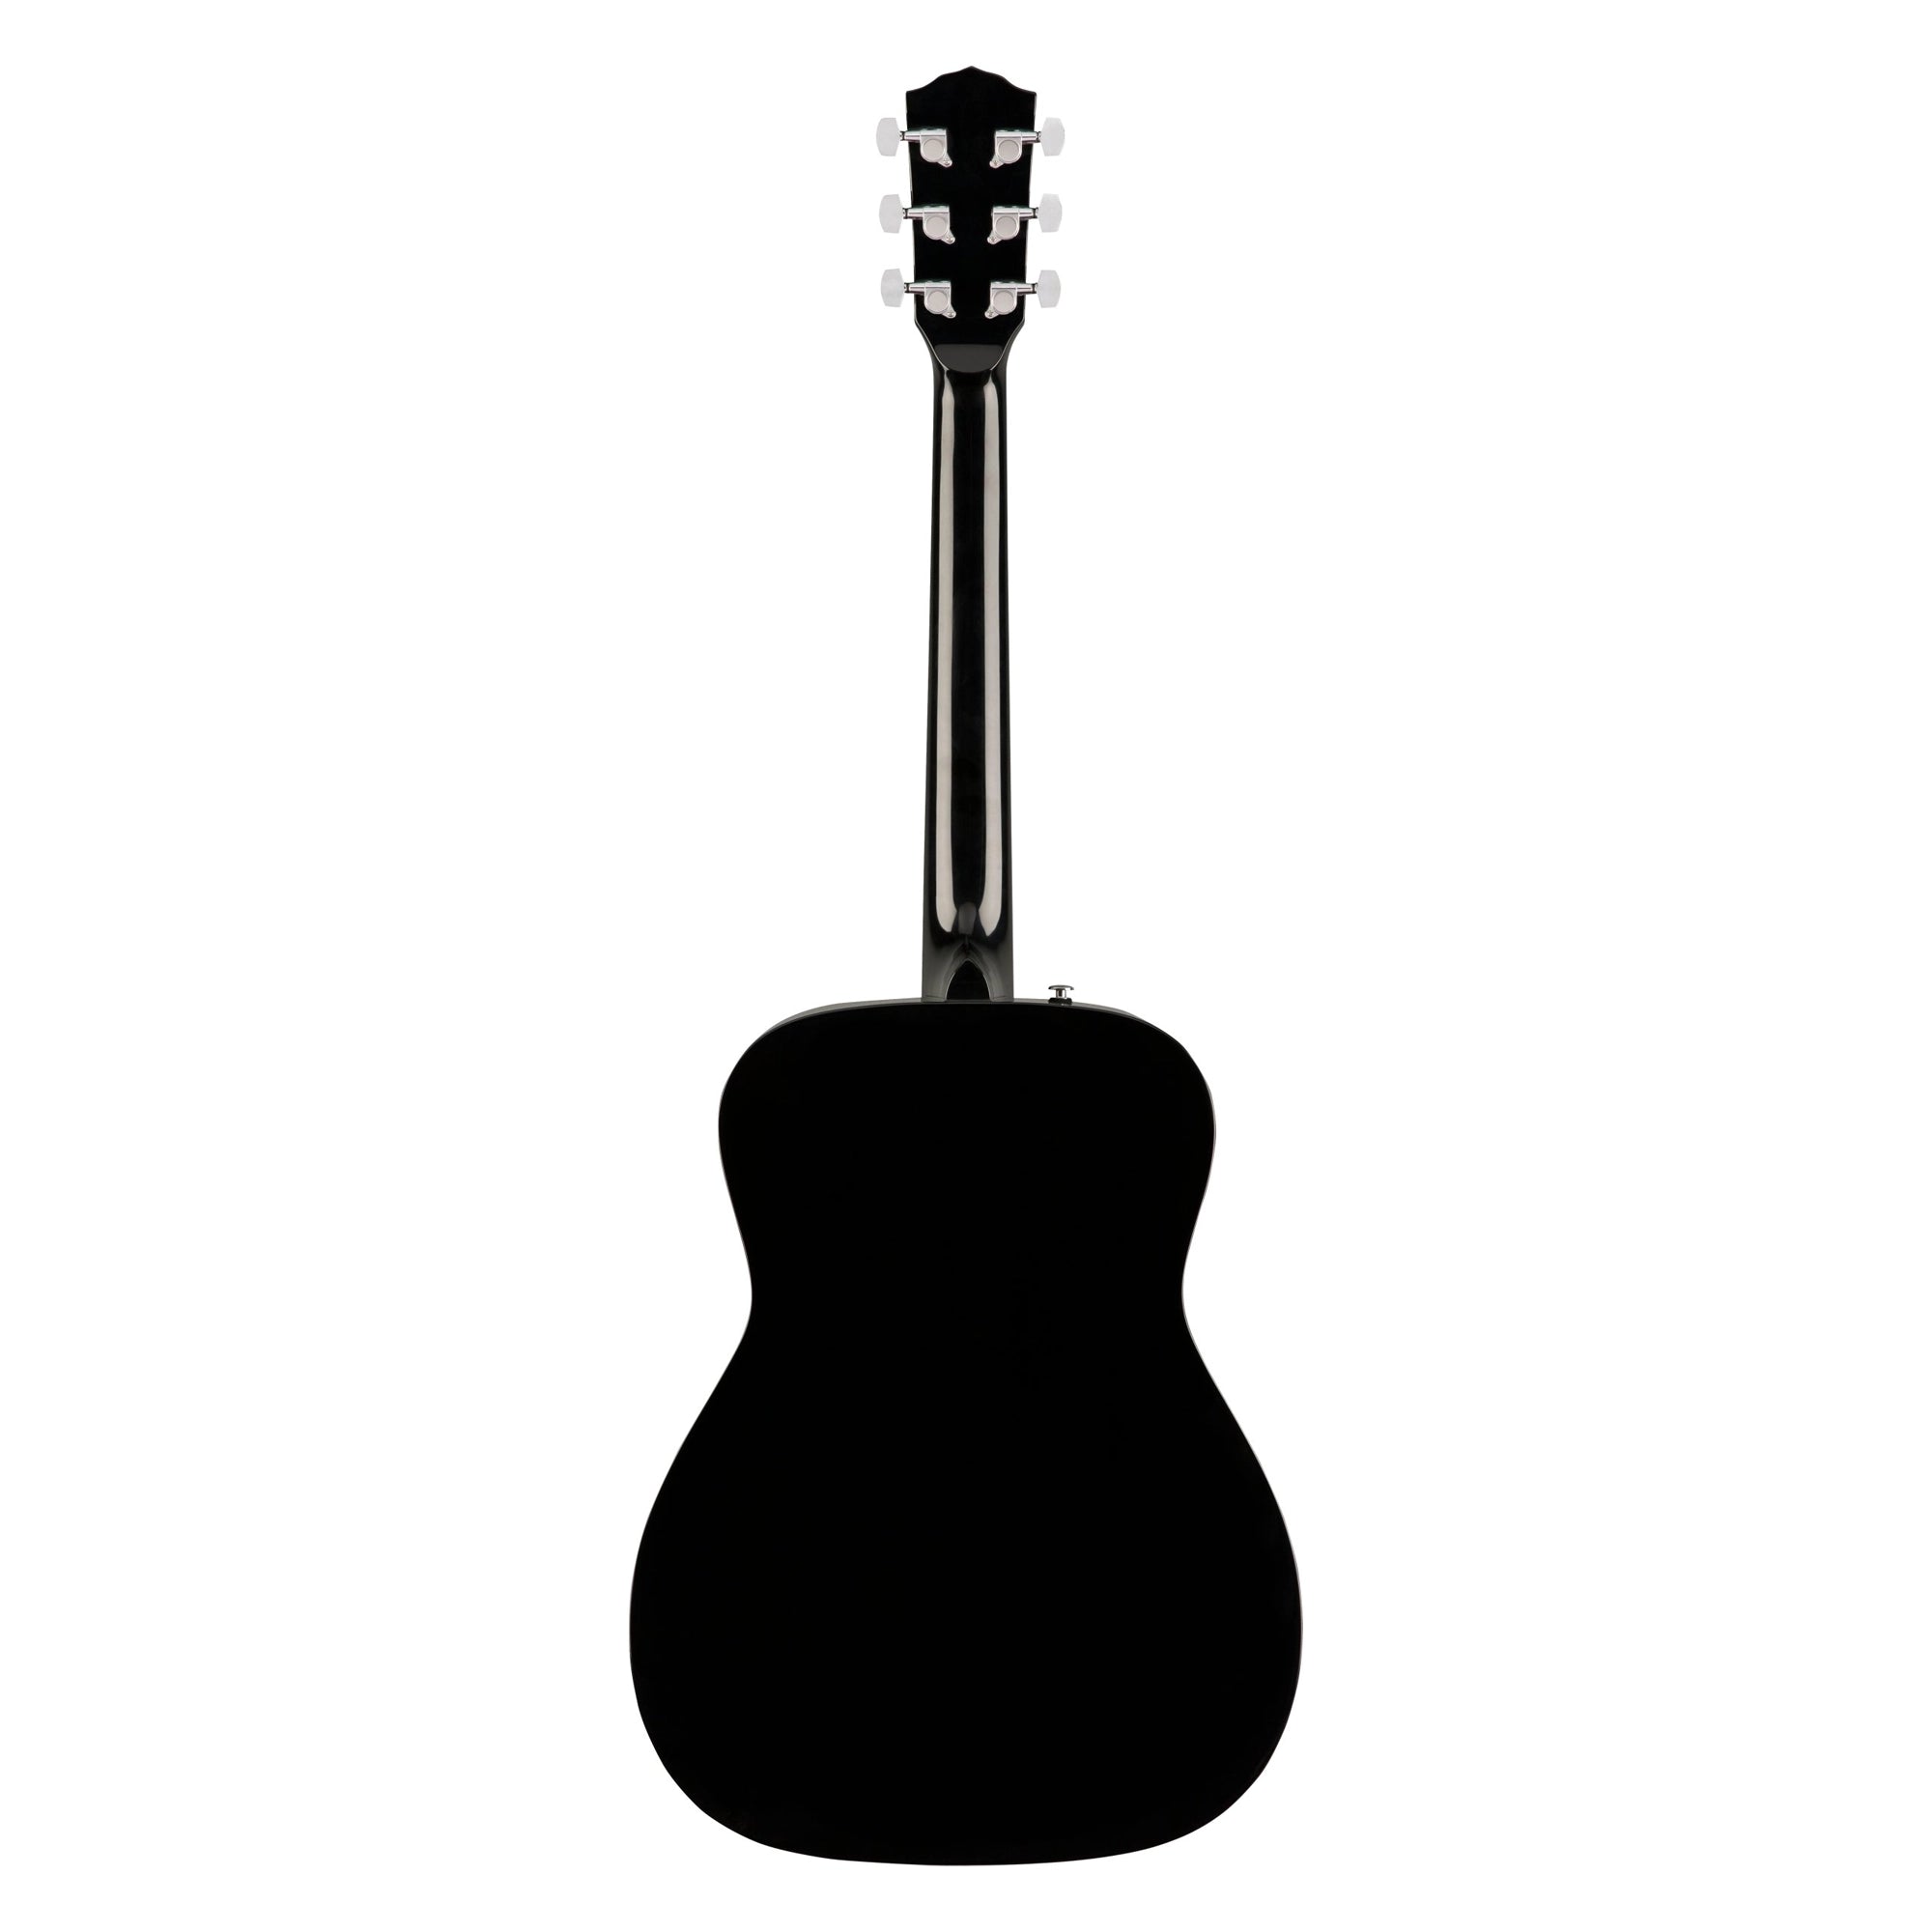 Fender CC-60S Concert Acoustic Guitar Pack - Black